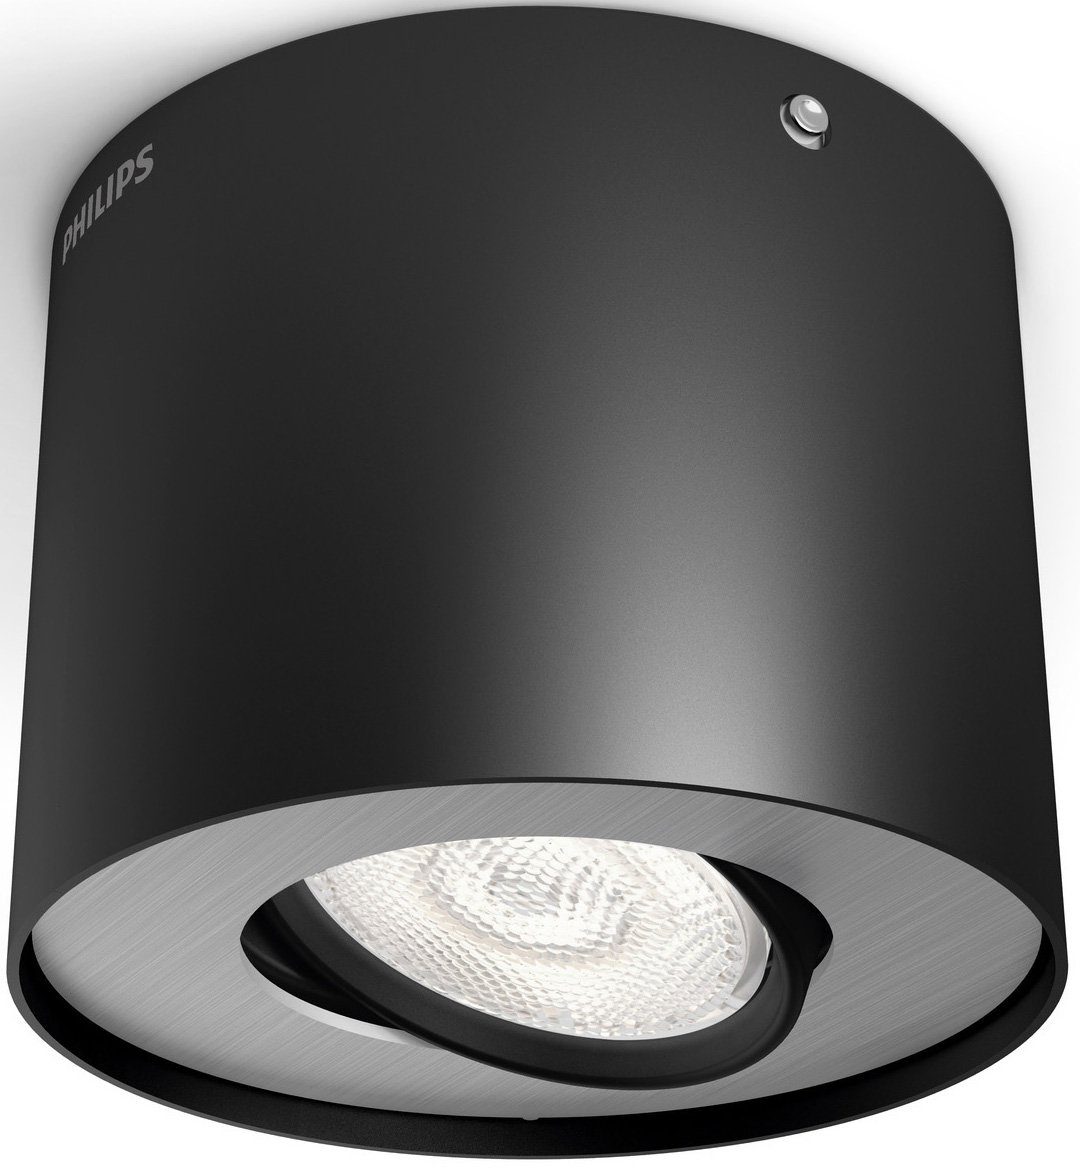 integriert, Deckenspot LED myLiving 500lm Schwarz LED 1flg. fest Spot Warmweiß, Phase, Philips